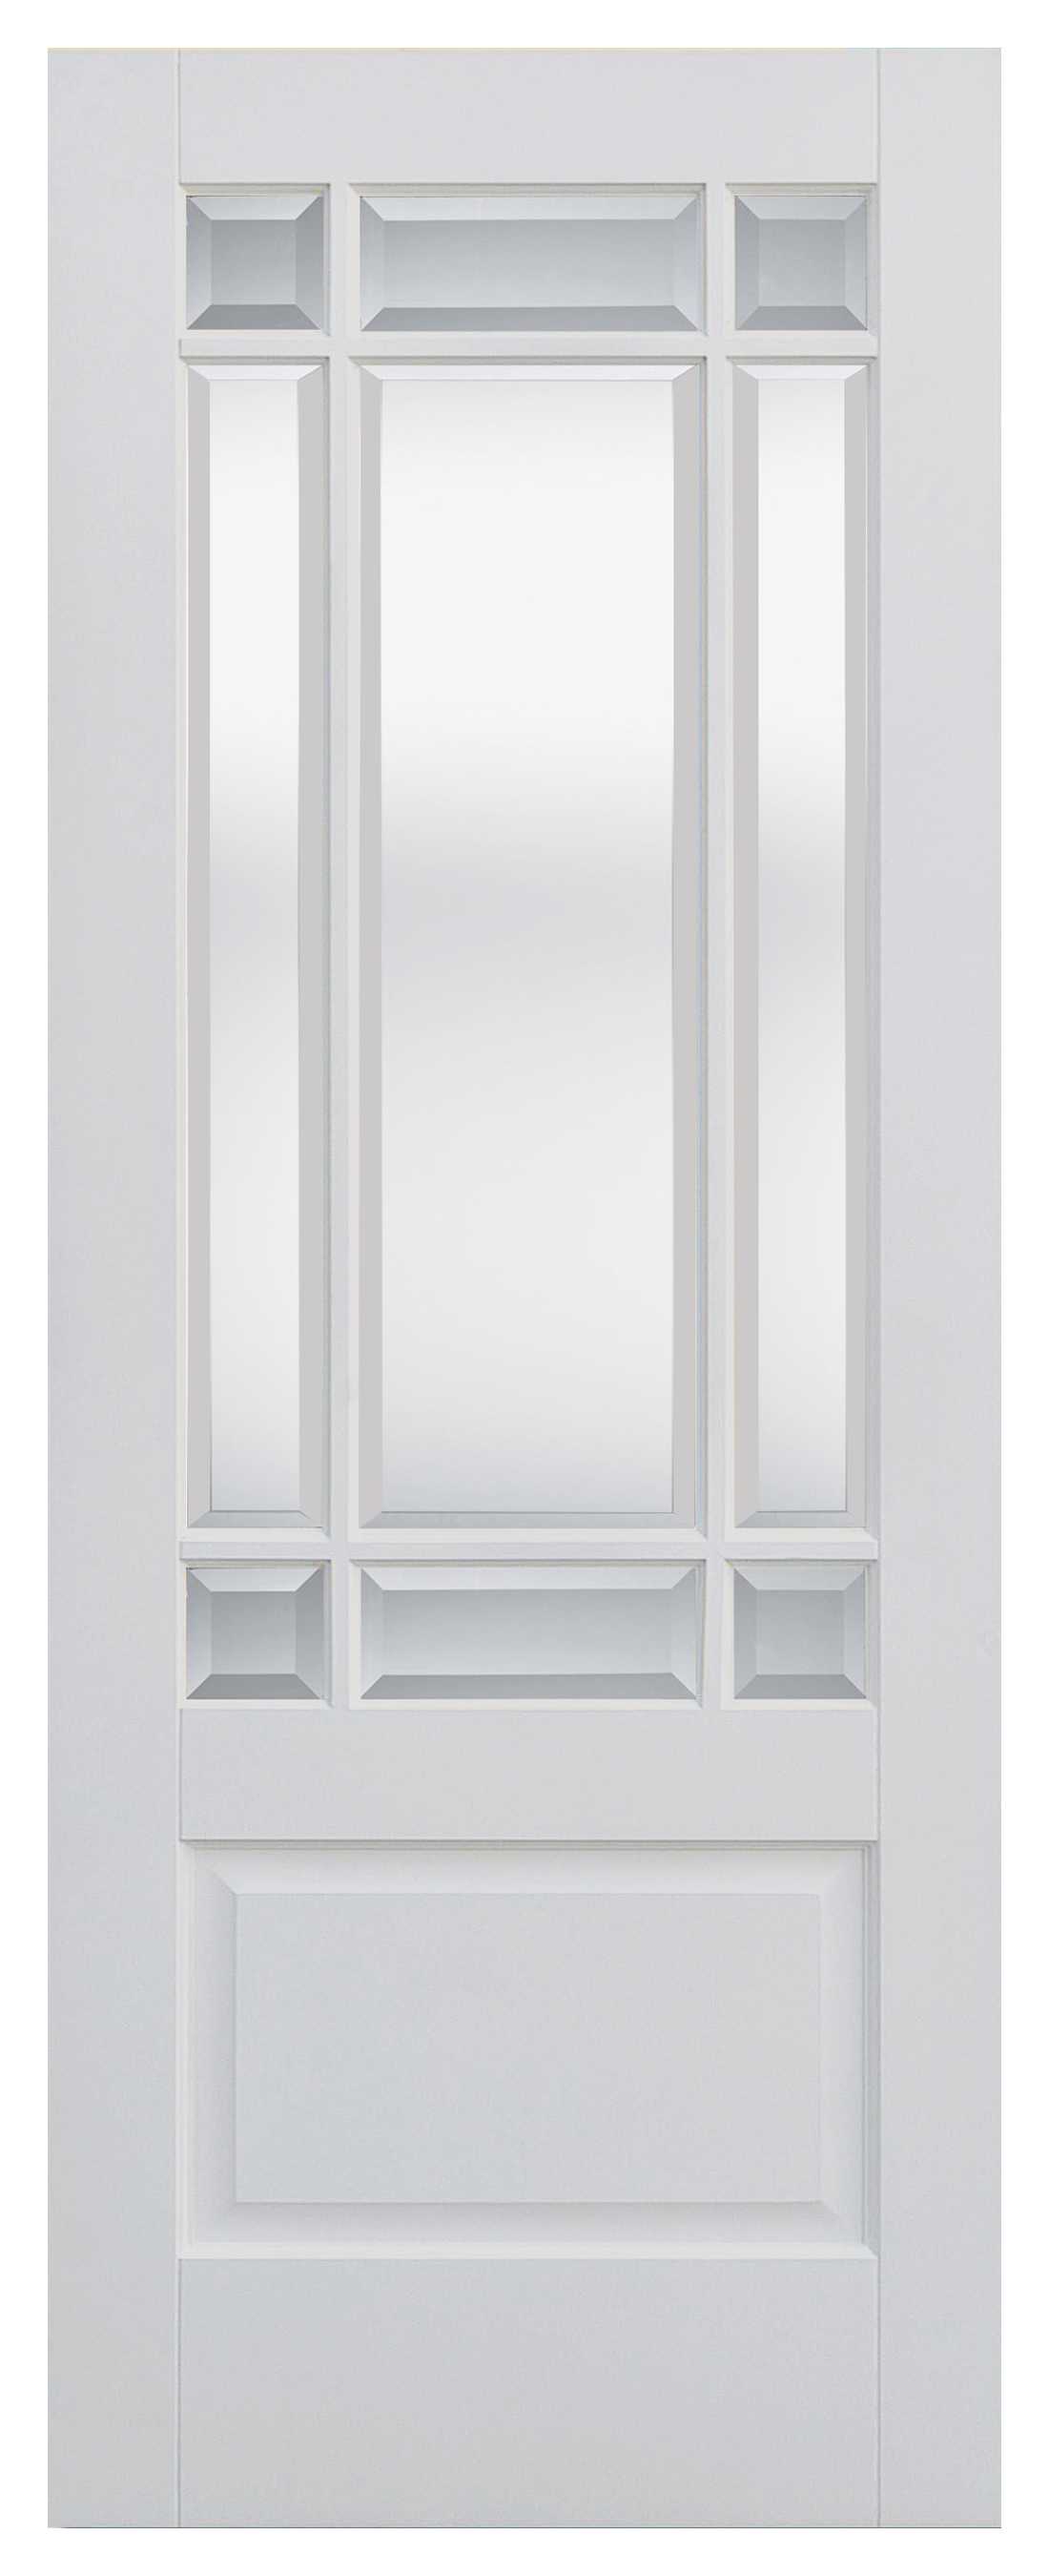 Image of LPD Internal Downham 9 Lite Glazed Primed White Solid Core Door - 838 x 1981mm